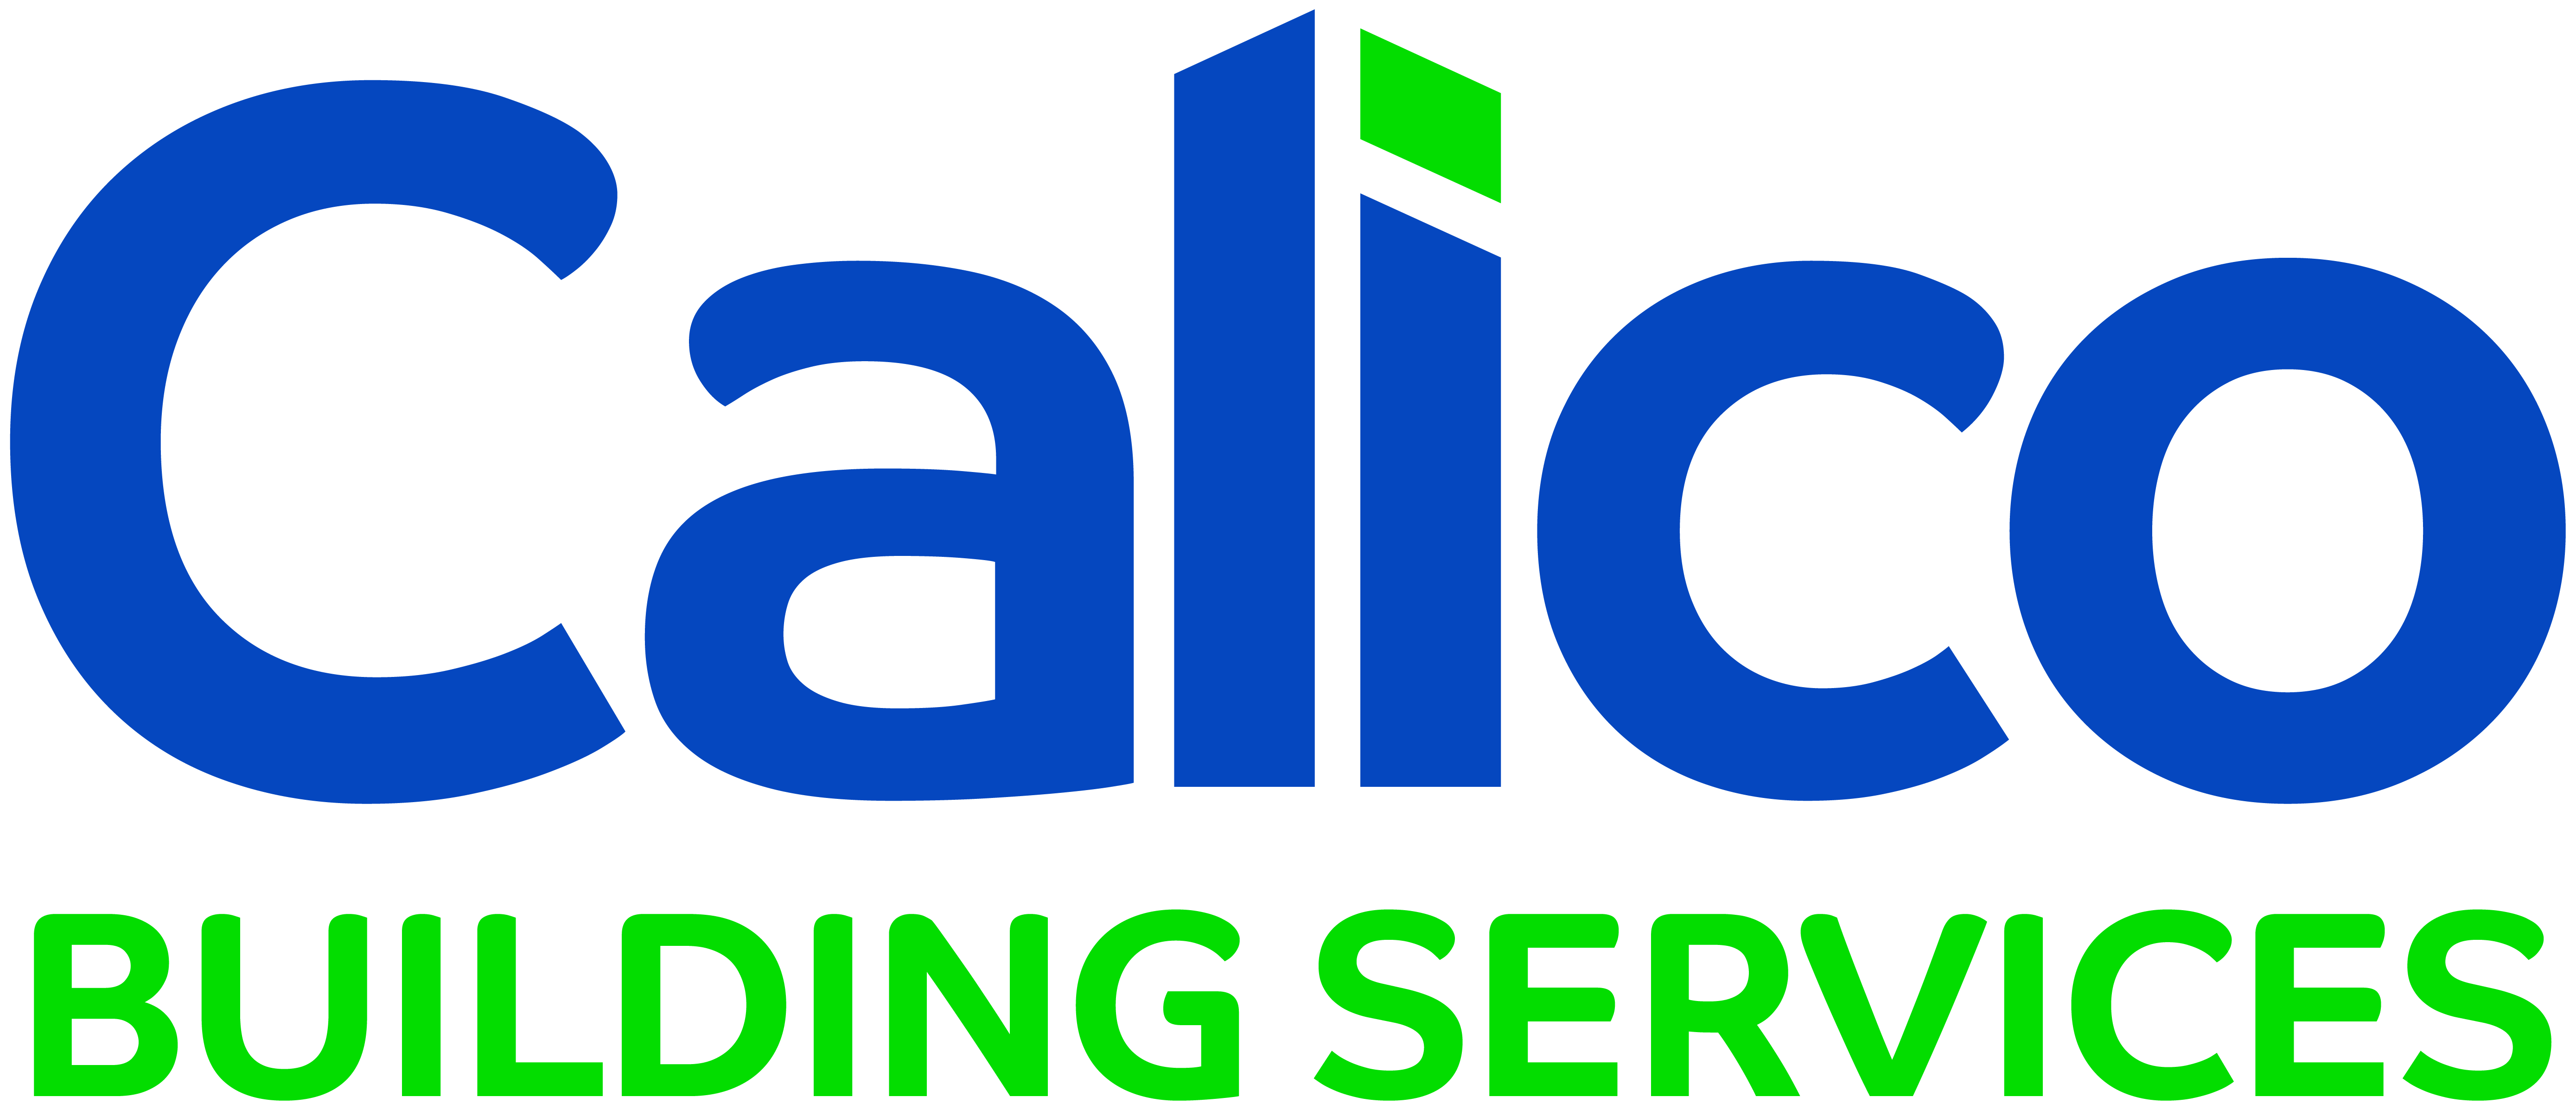 Calico Building Services, Inc.